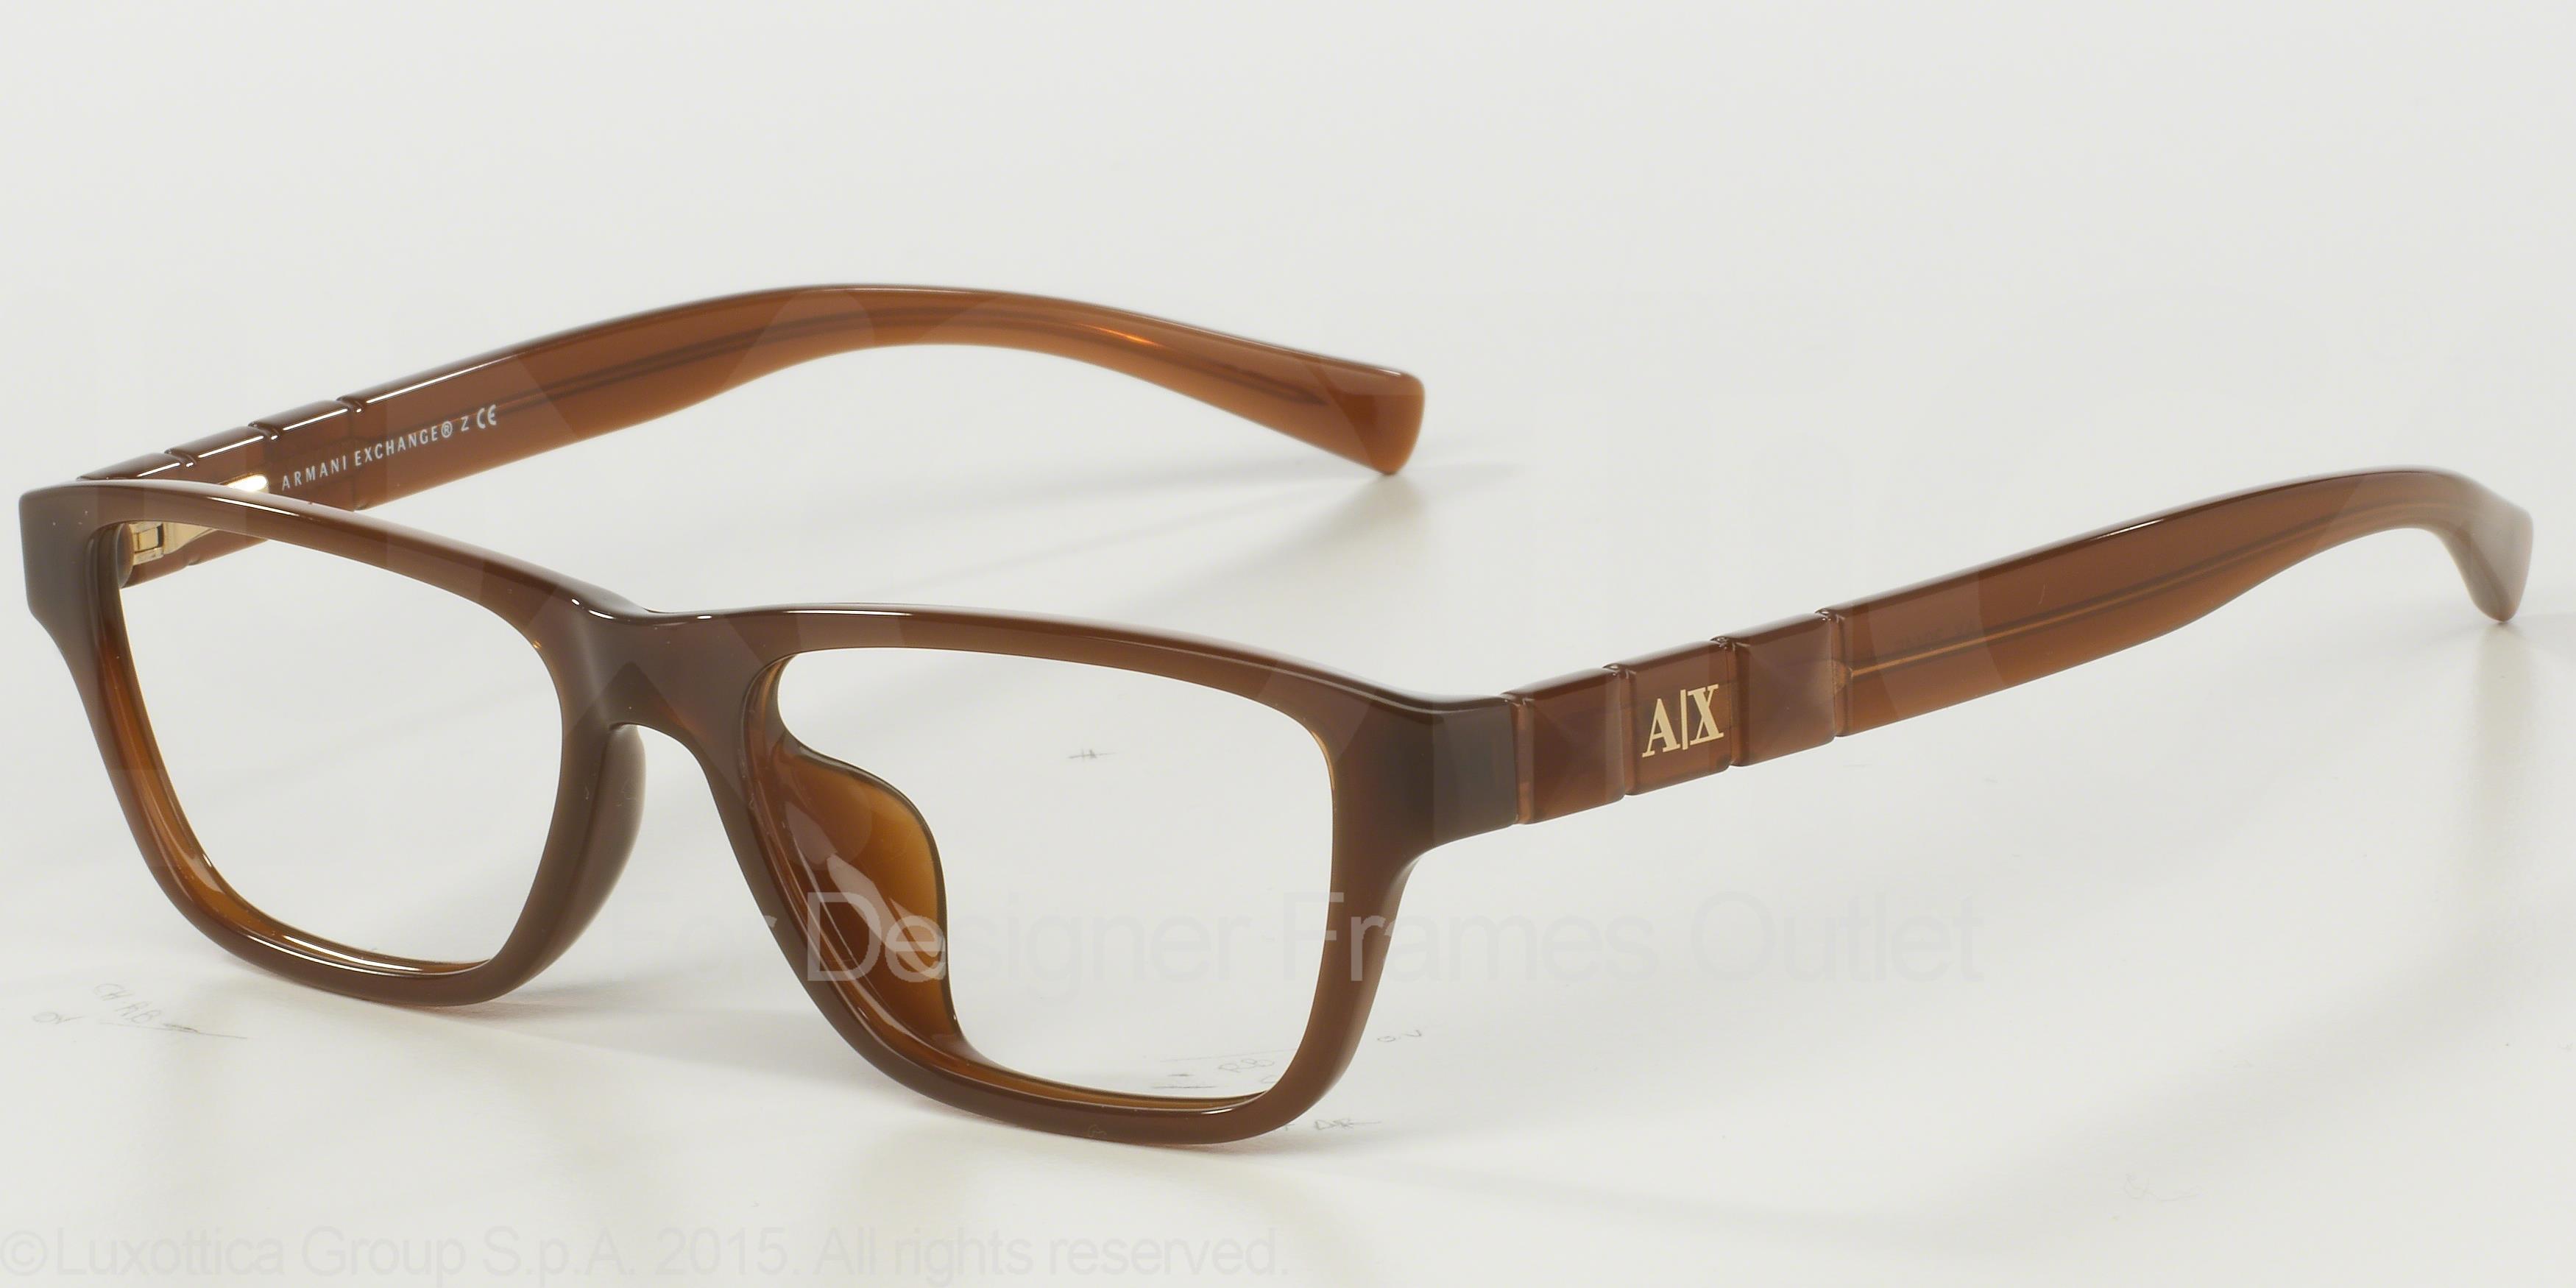 Picture of Armani Exchange Eyeglasses AX3014